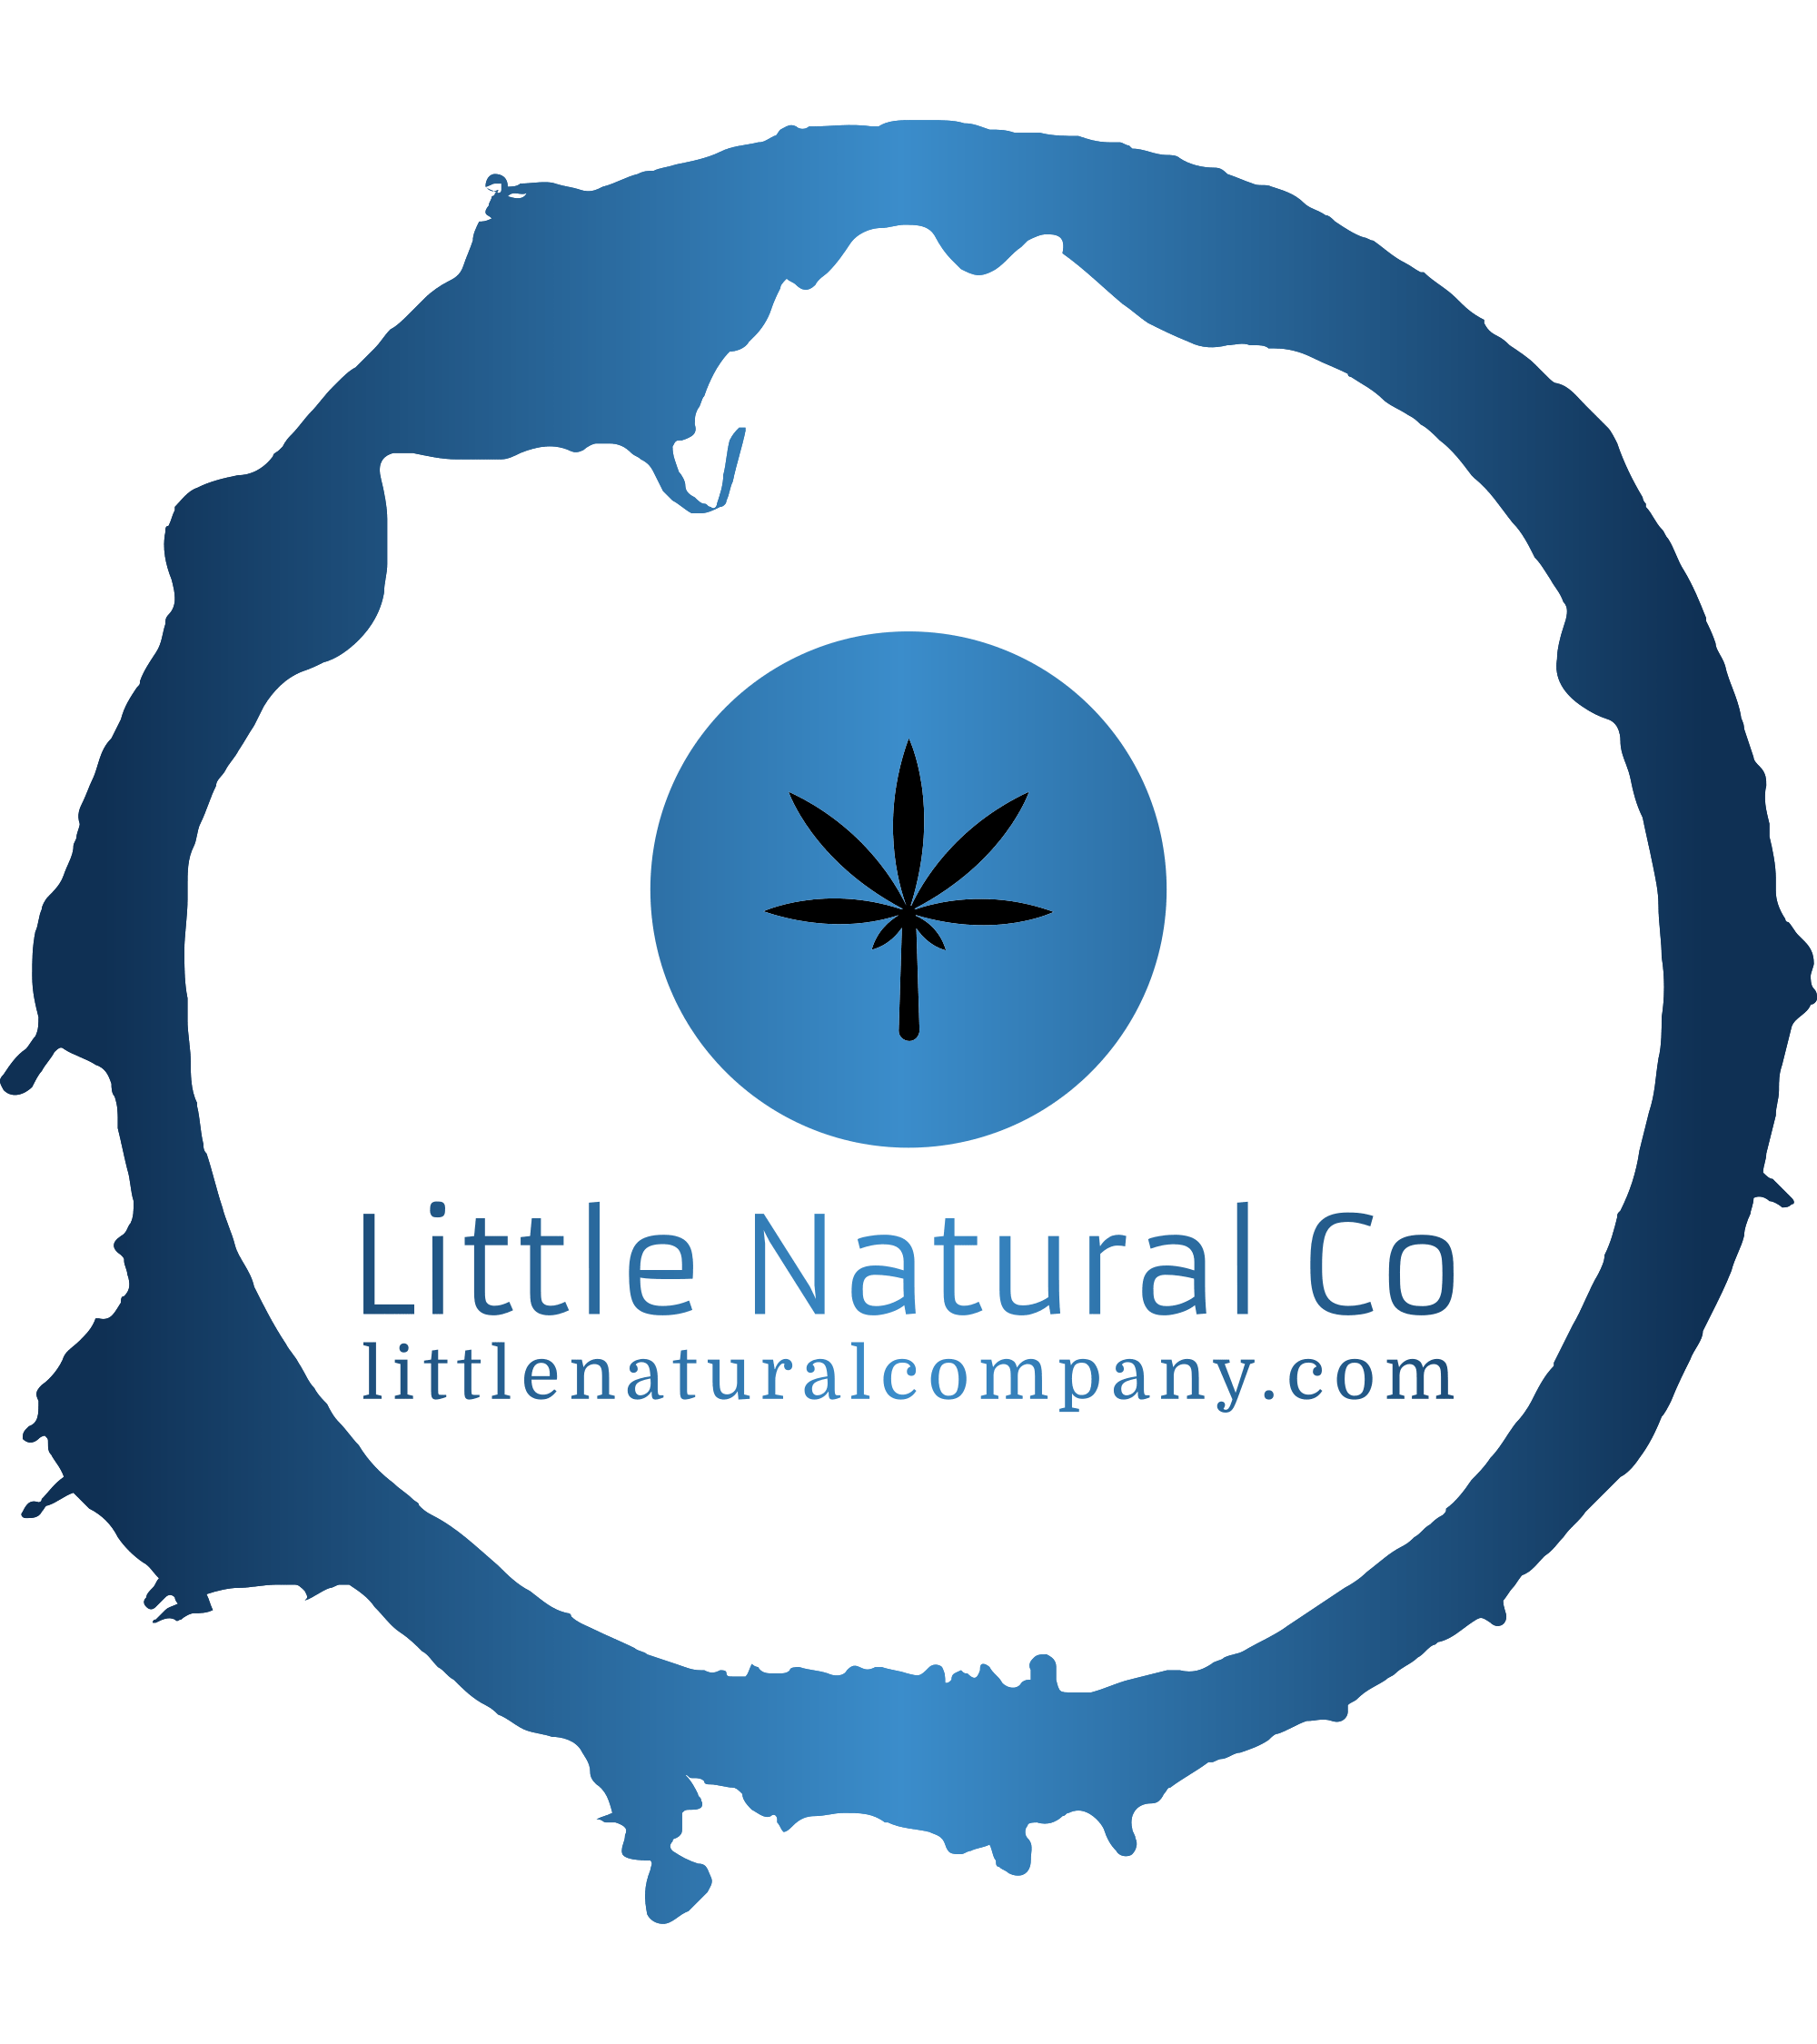 little-natural-co_logo